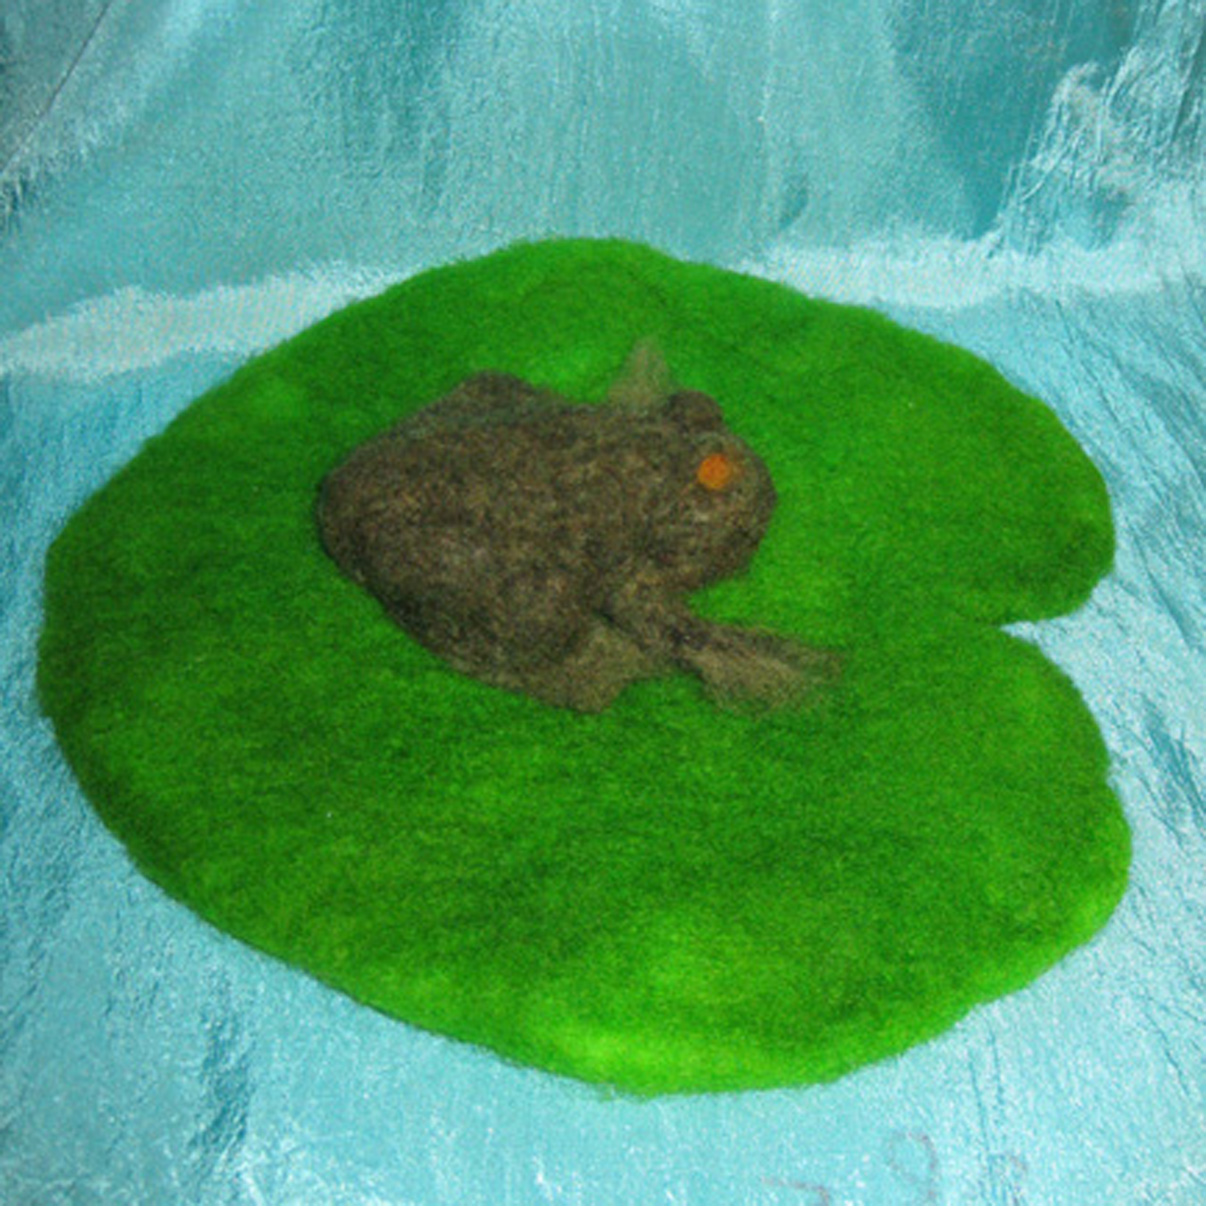 Mr Frog on his lilypad